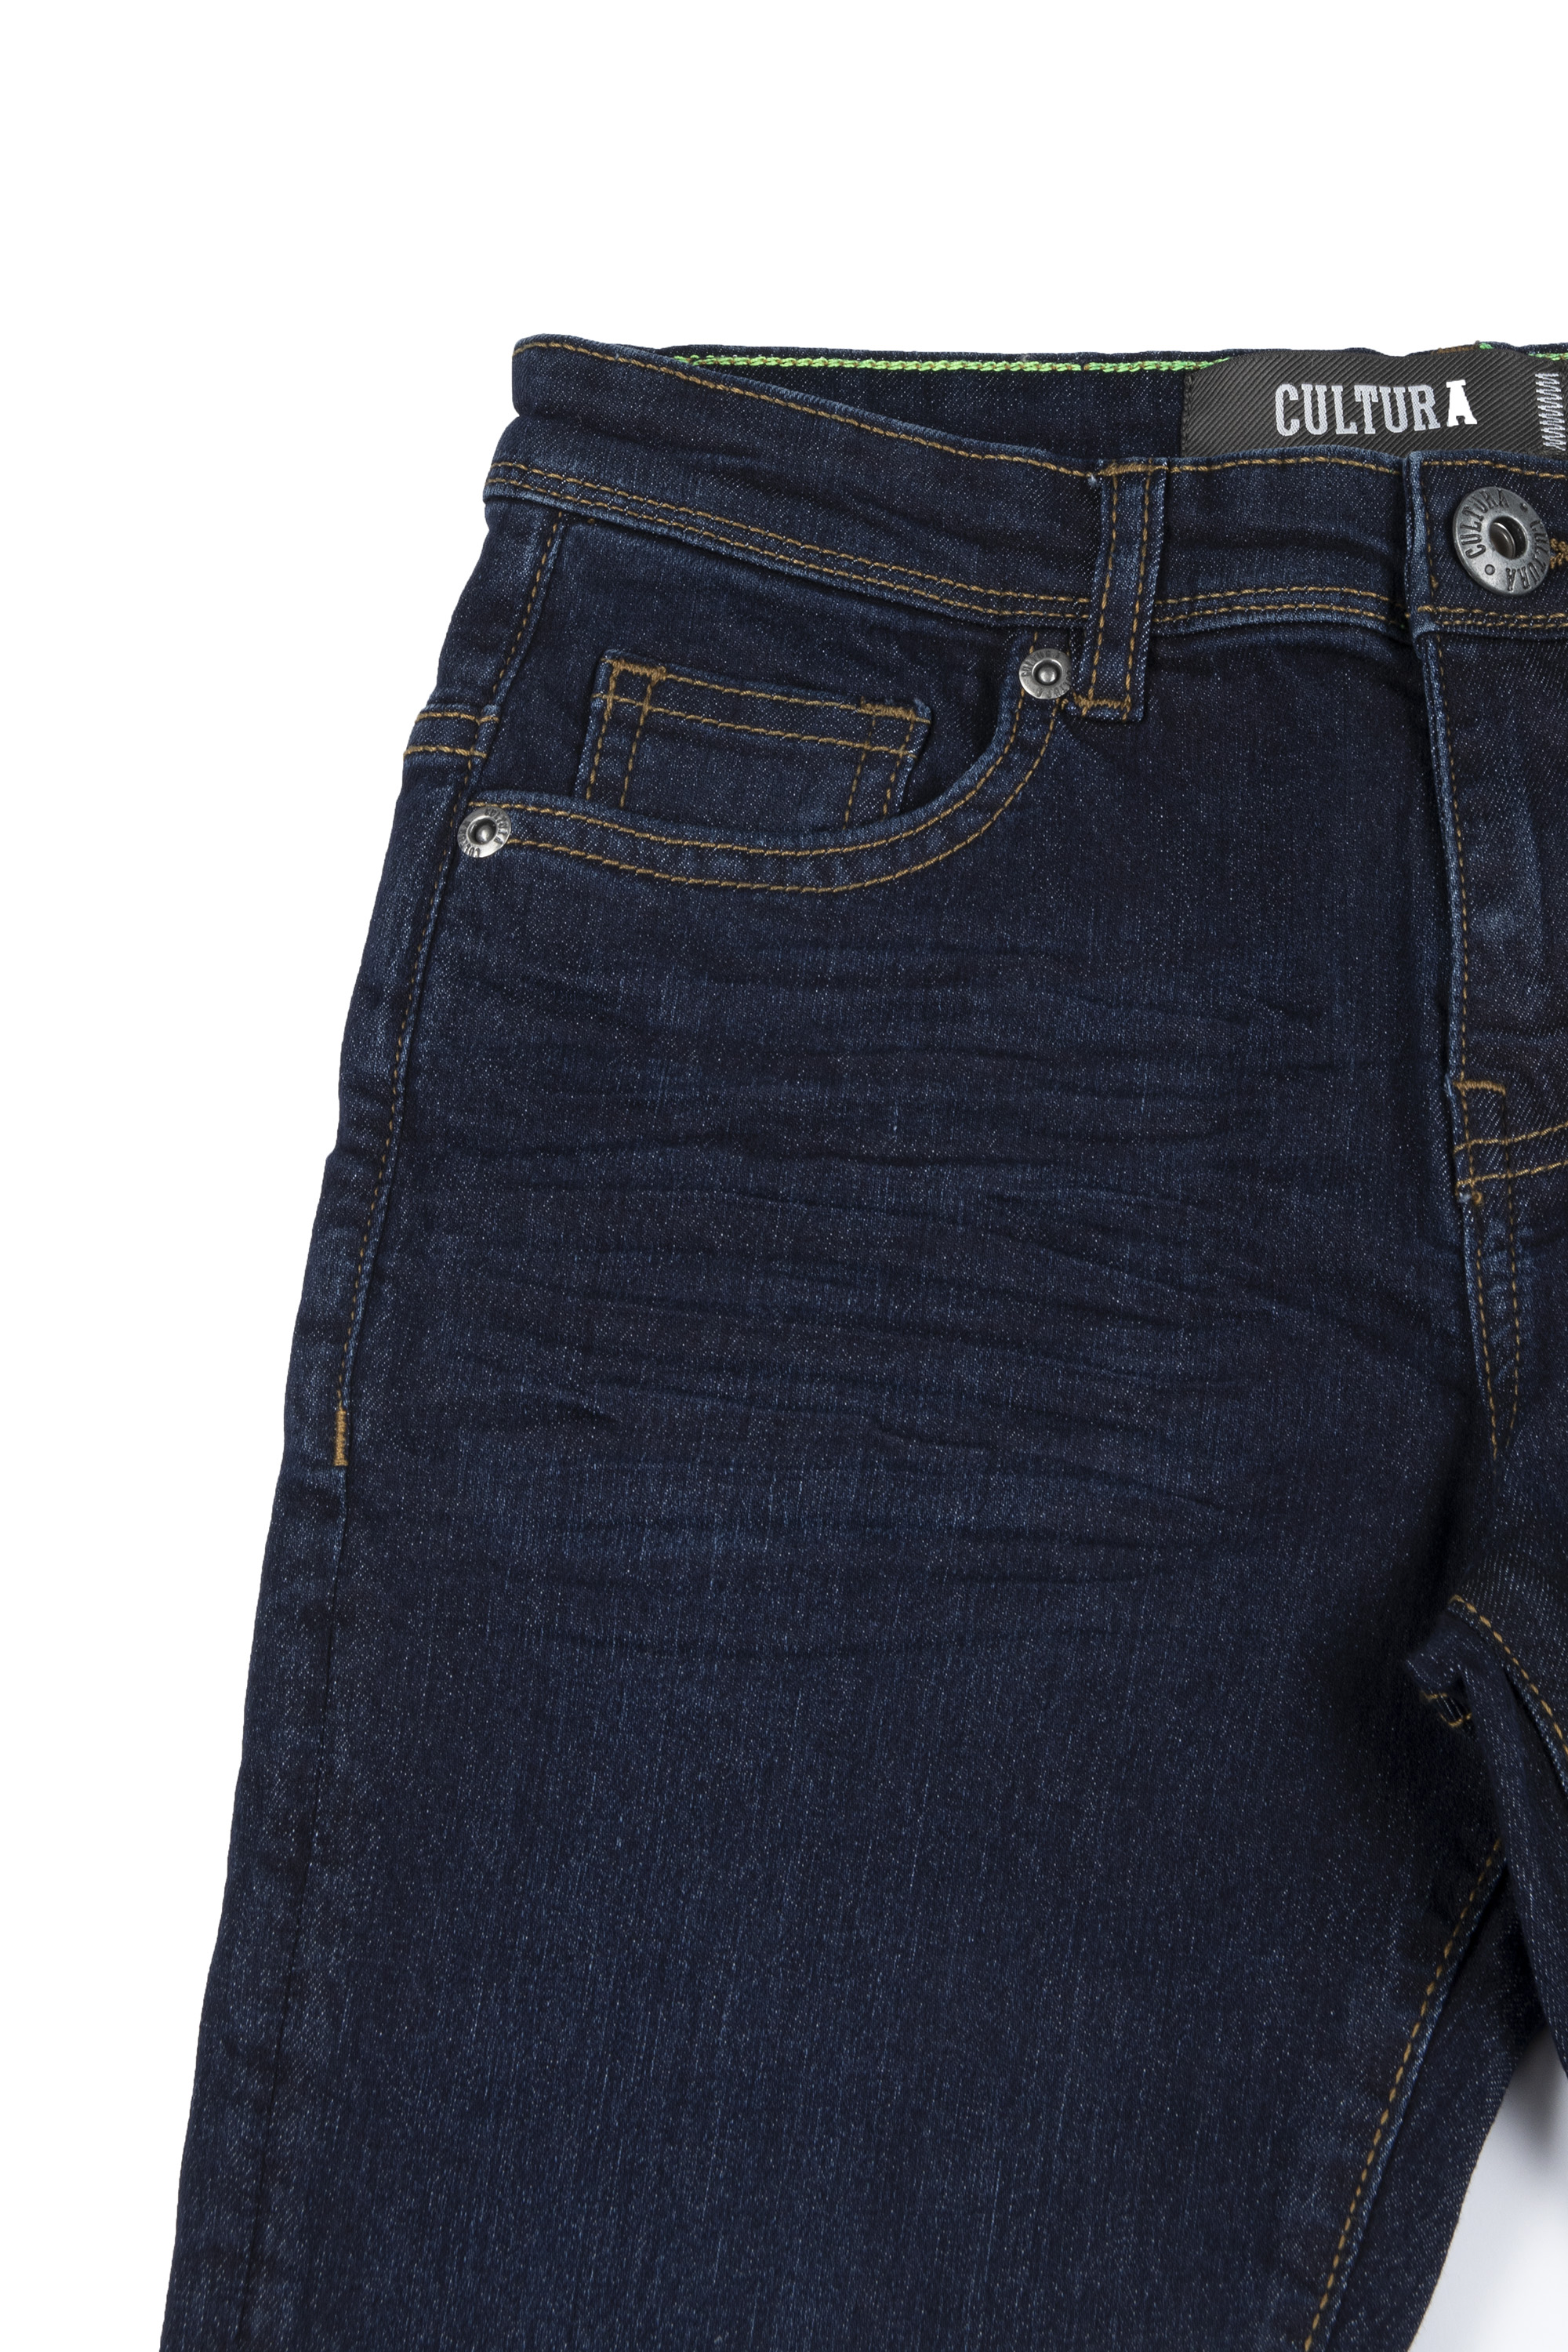 CULTURA Skinny Jeans for Little Boys Slim Wash Stretch Comfy Denim Pants,  Age 3-7, Dark Blue Accent Stitch, Size 5